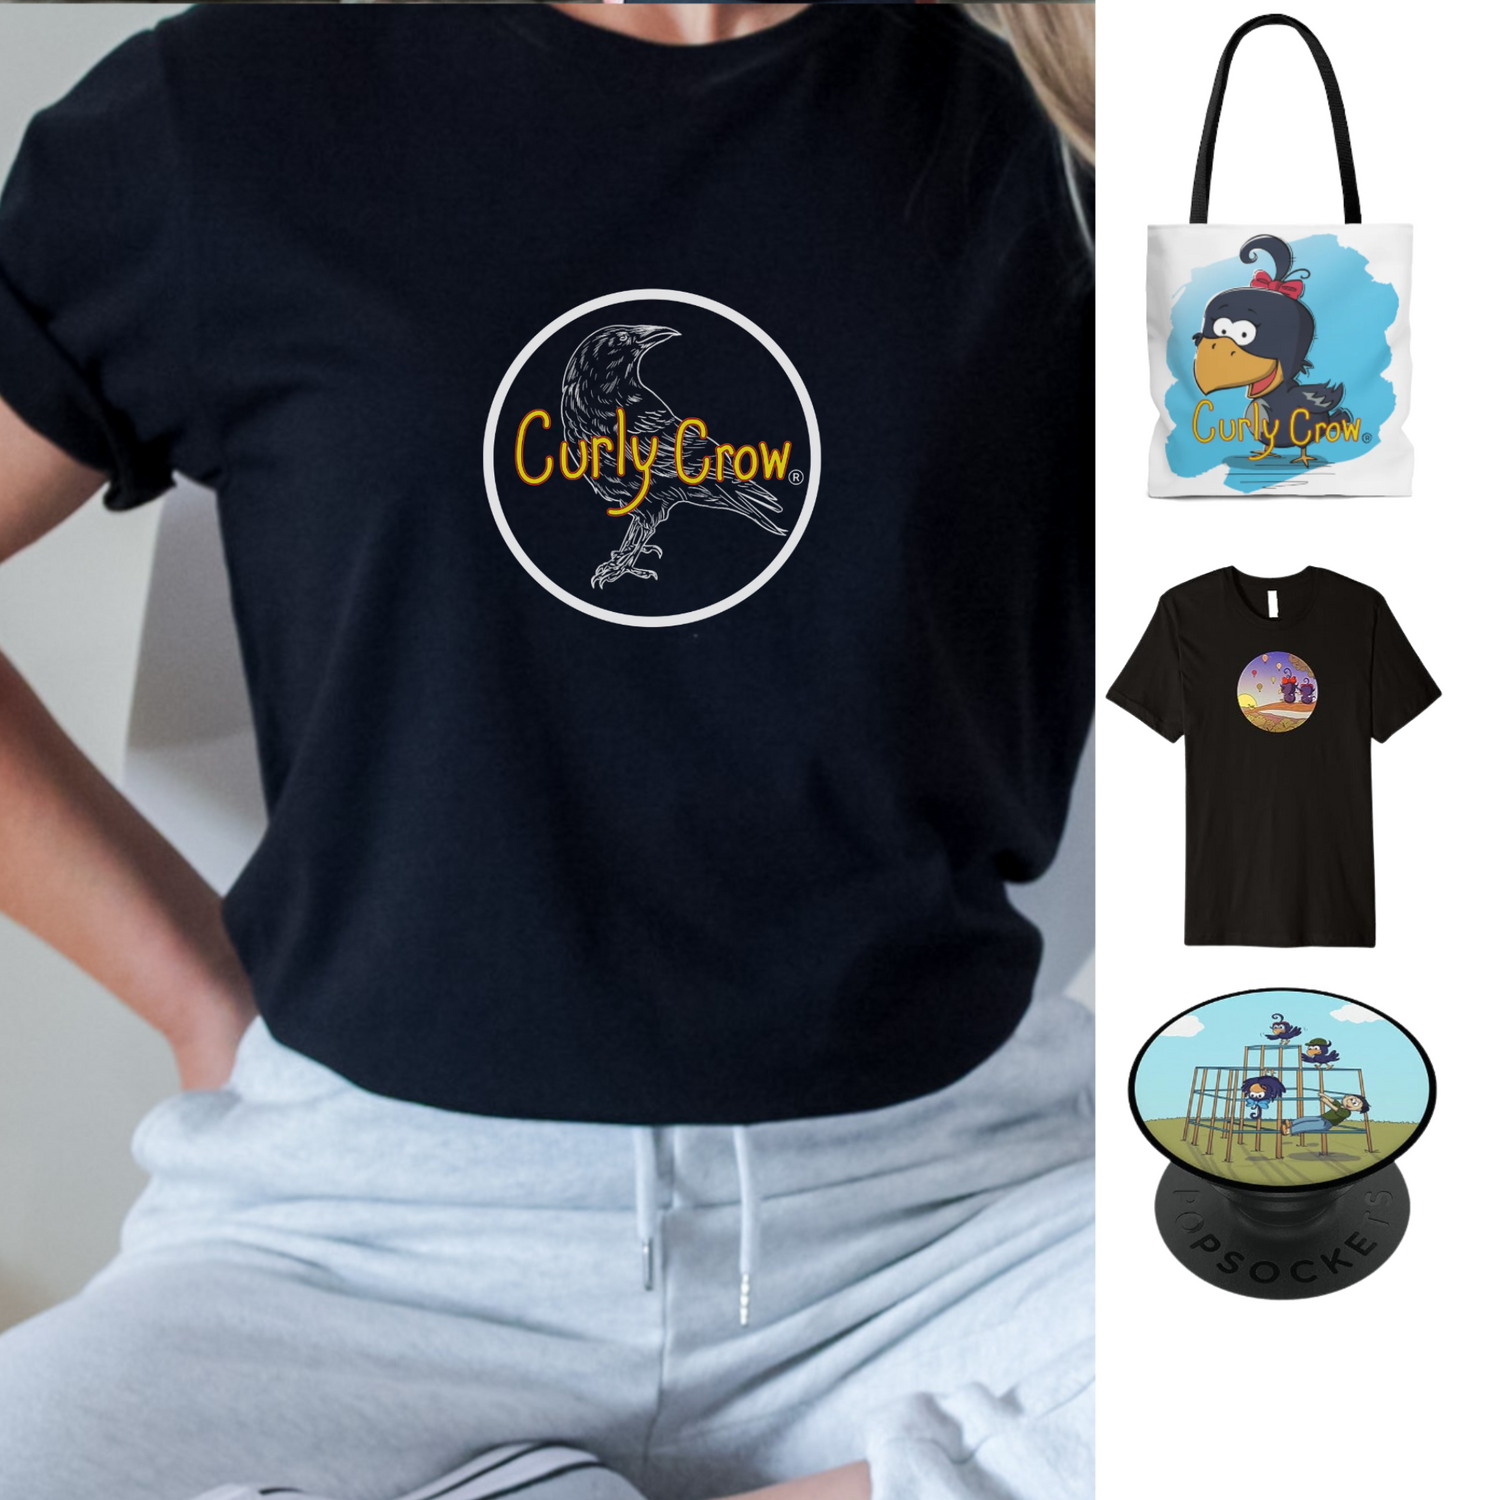 Curly Crow t-shirt designs and cool pop grip pop socket art work 